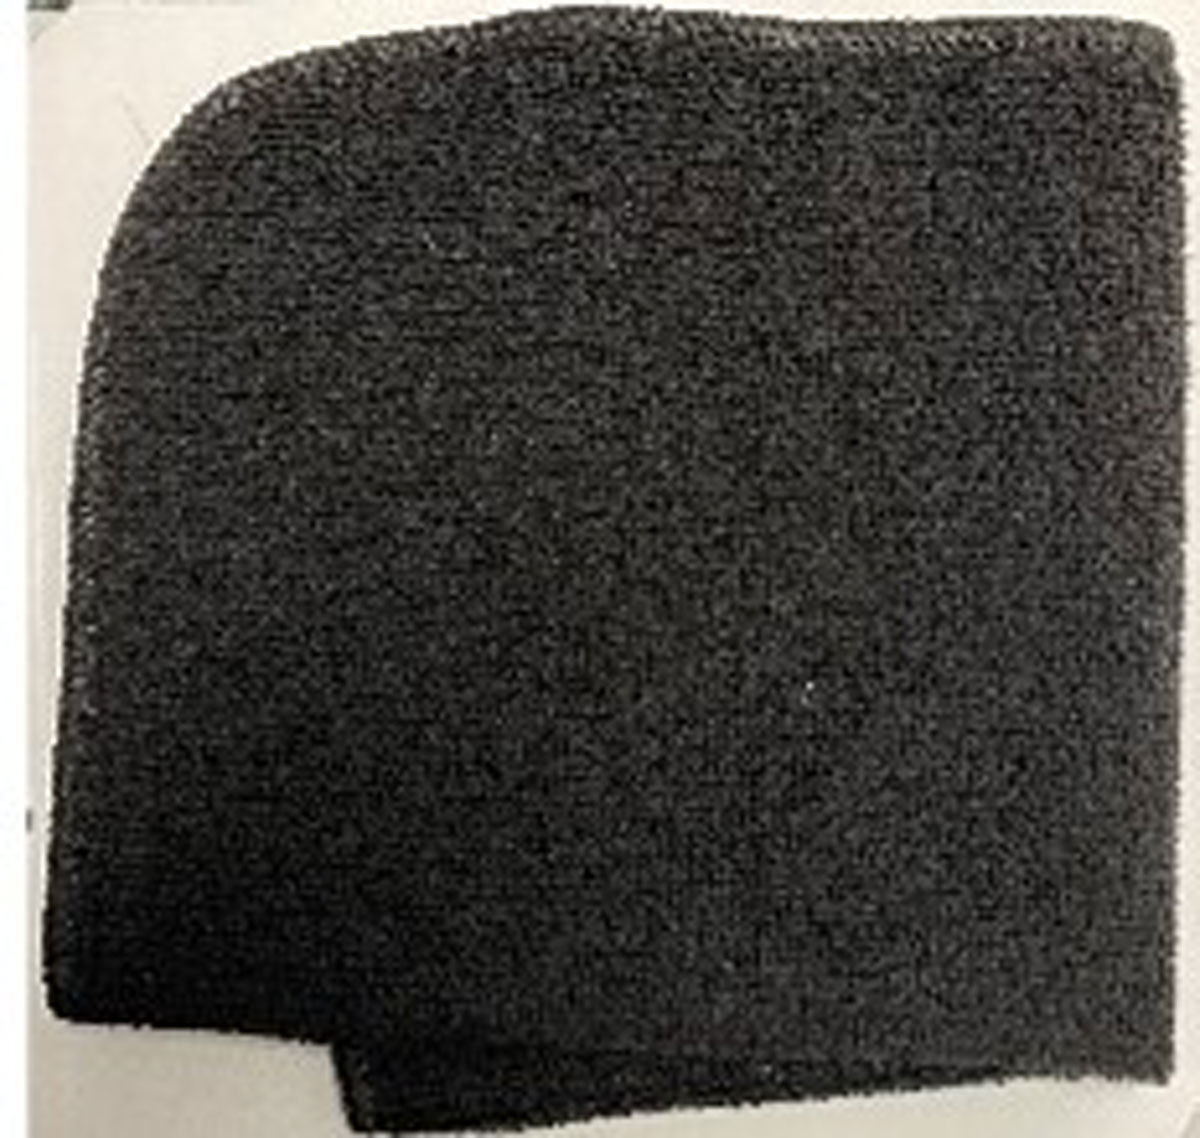 How big is the black microfiber towel?